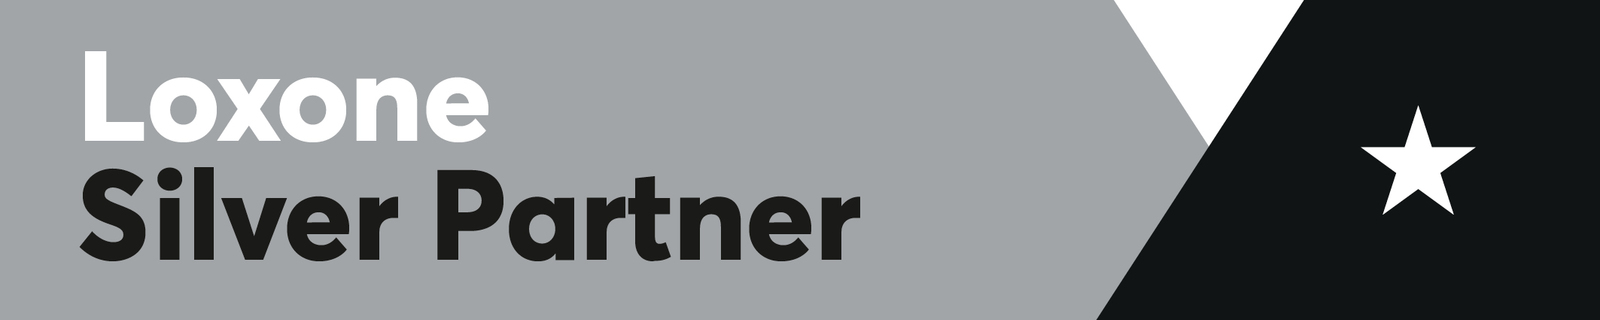 Loxone_Logo-Partner_Silver_2019.jpg